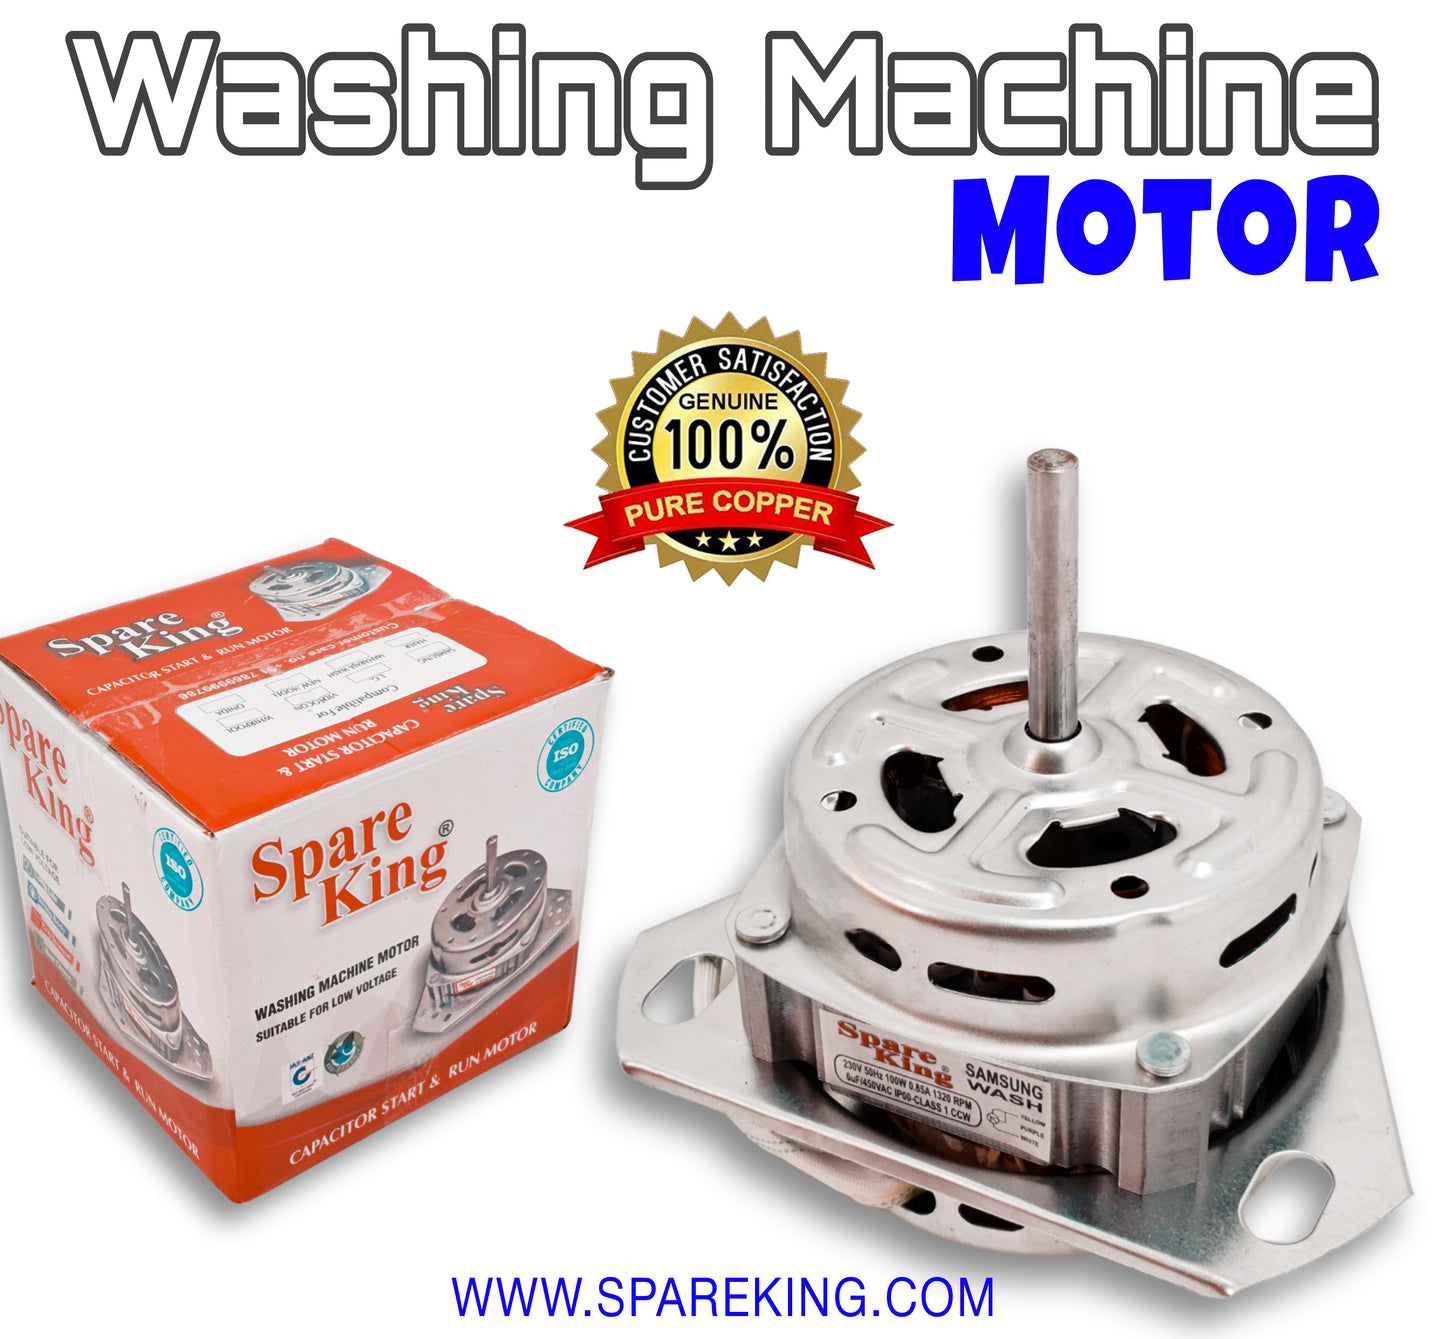 Wash Motor - Washing Machine